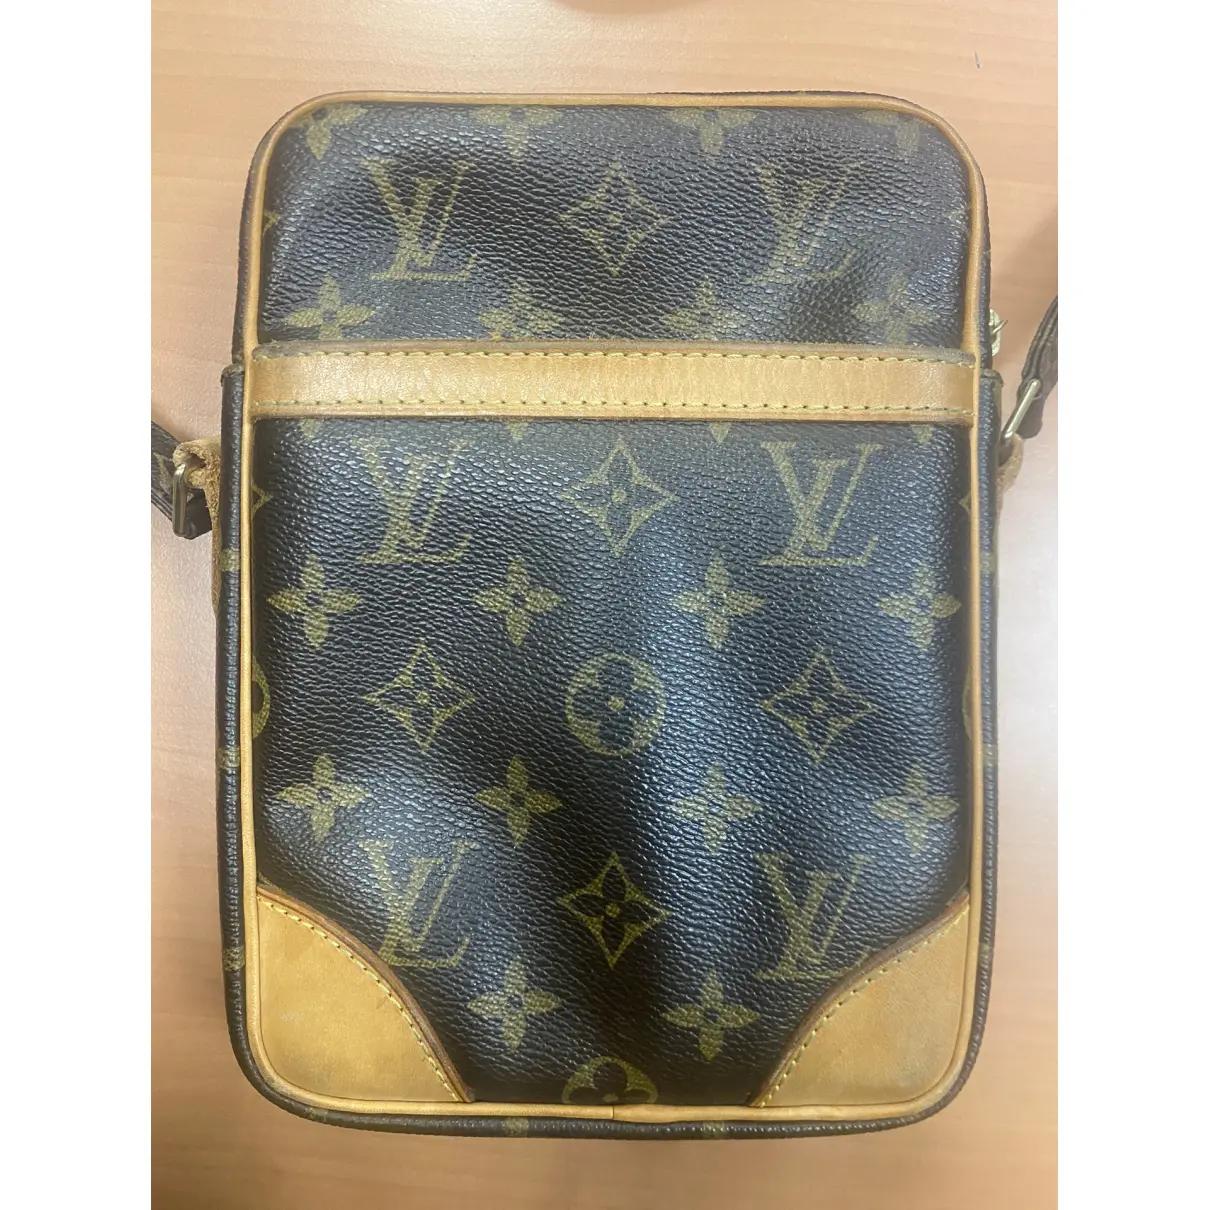 Buy Louis Vuitton Leather bag online